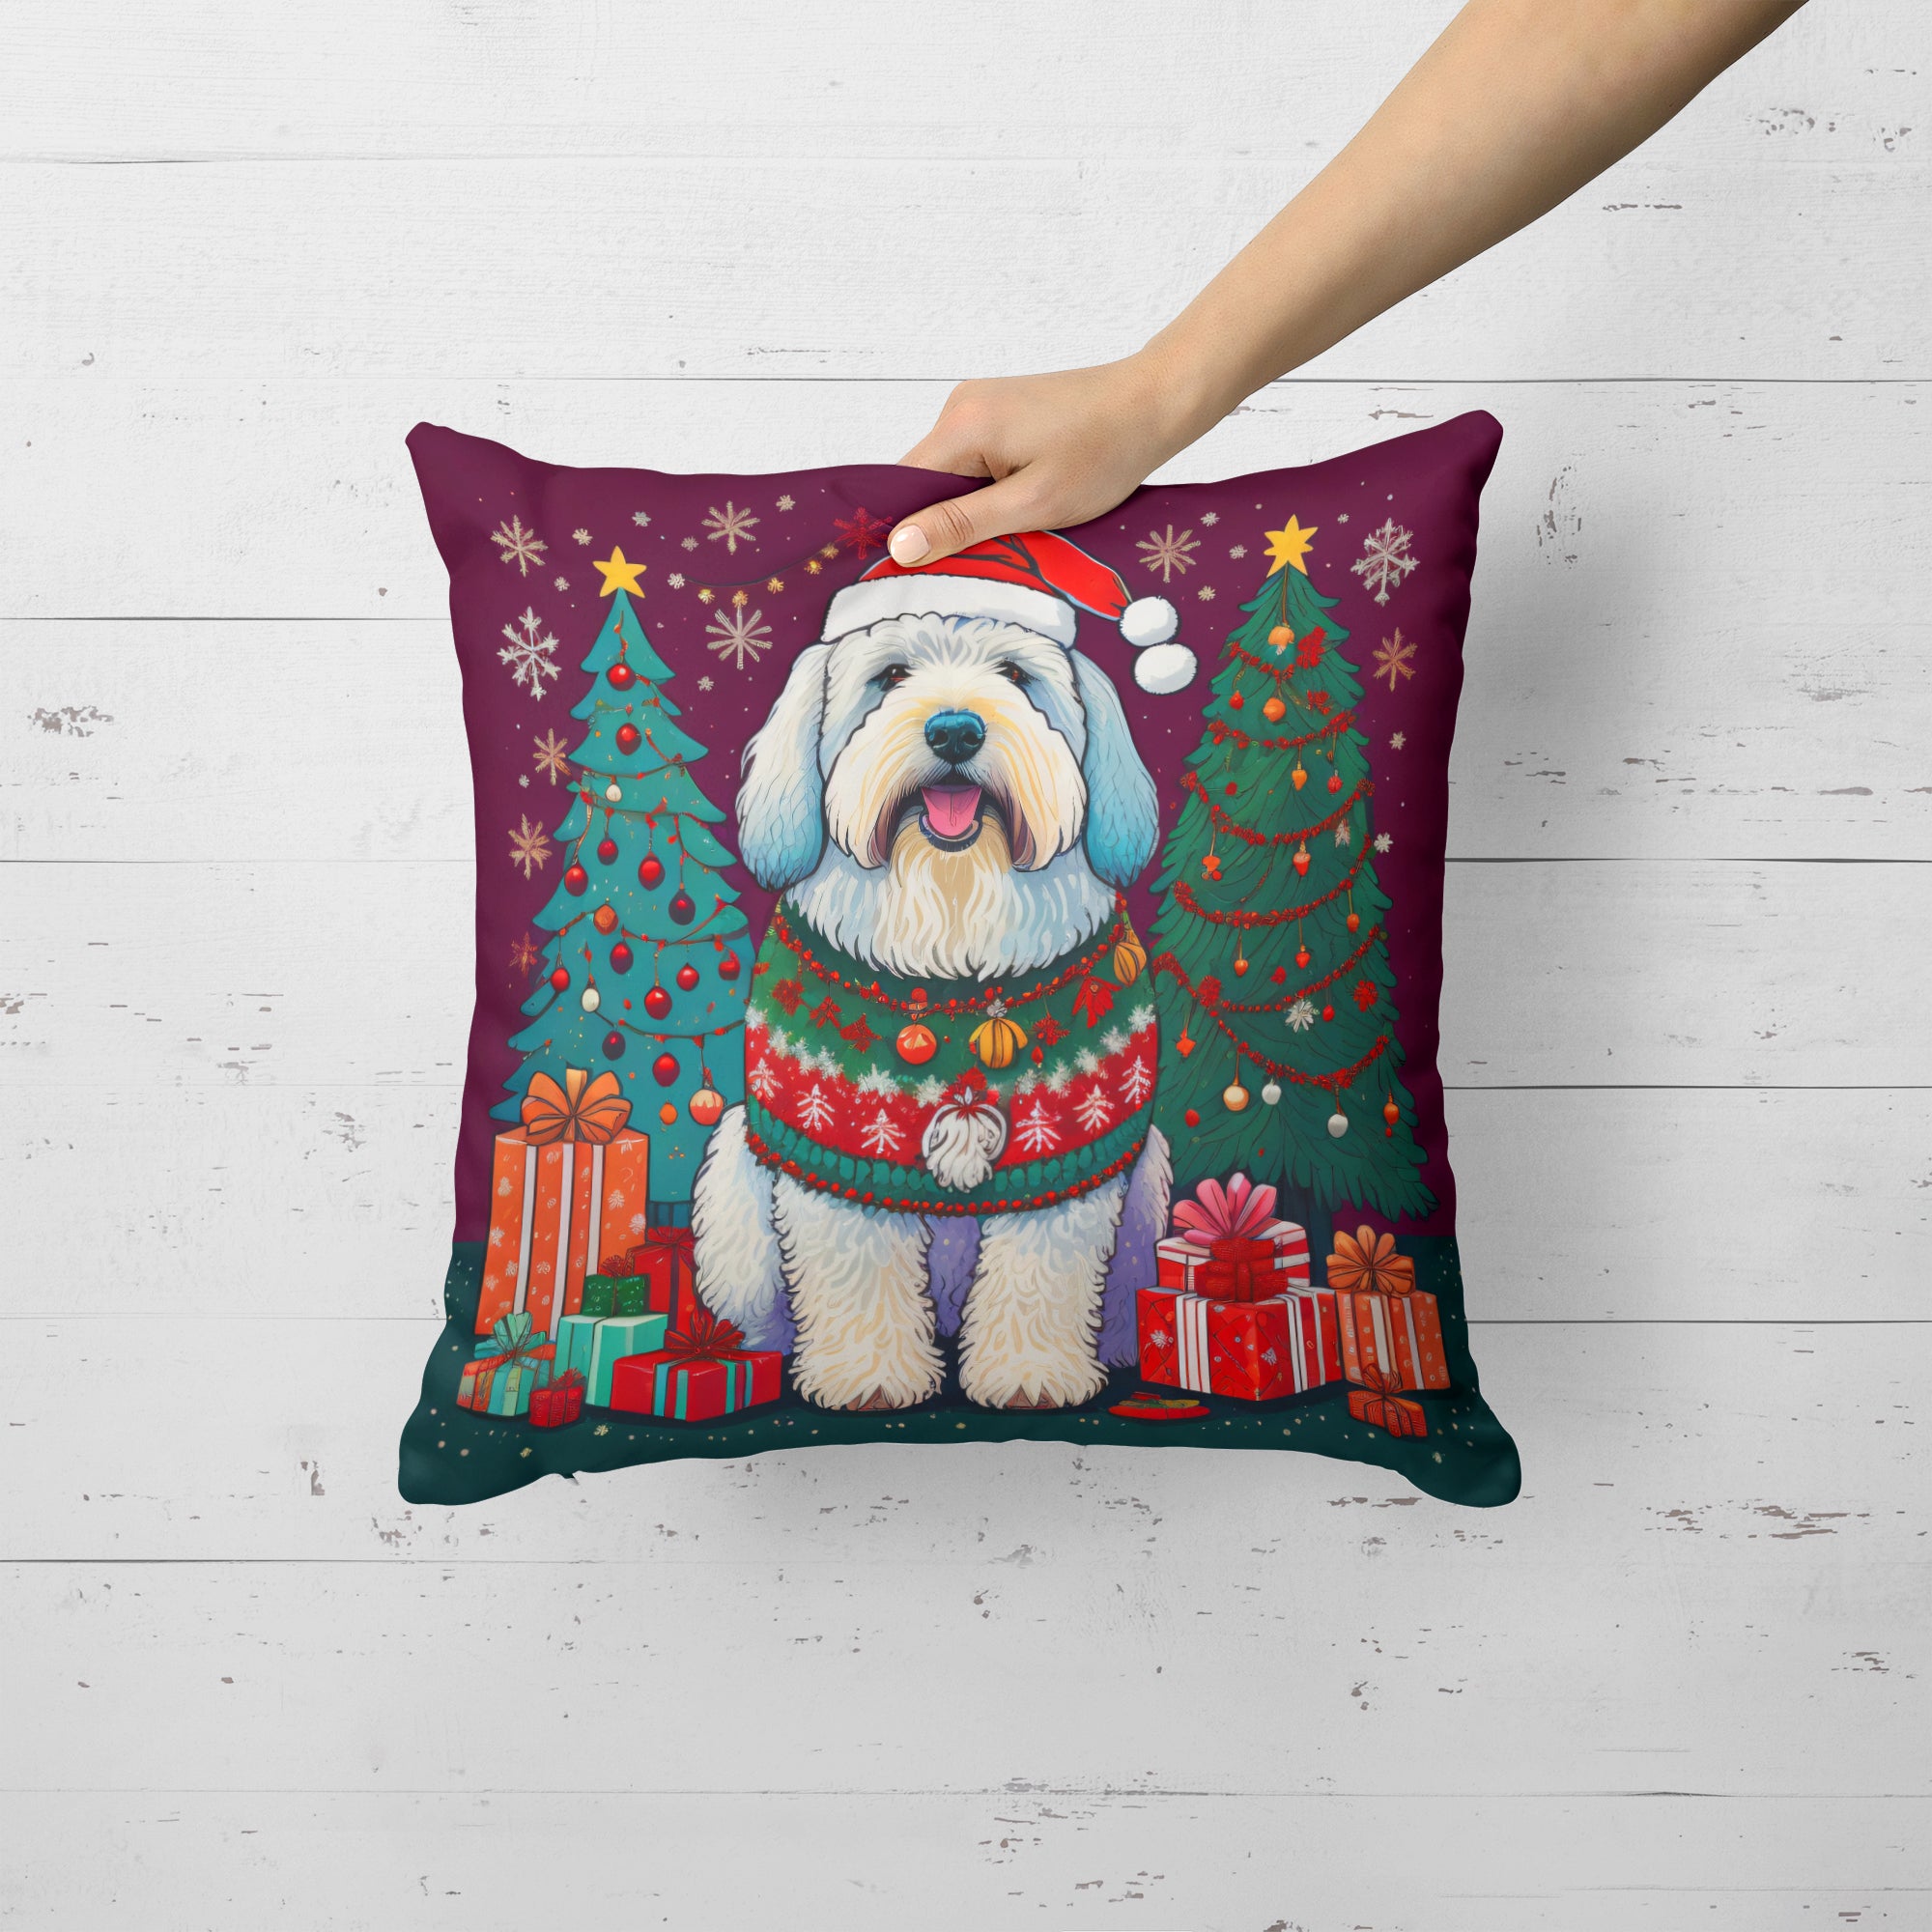 Buy this Old English Sheepdog Christmas Fabric Decorative Pillow